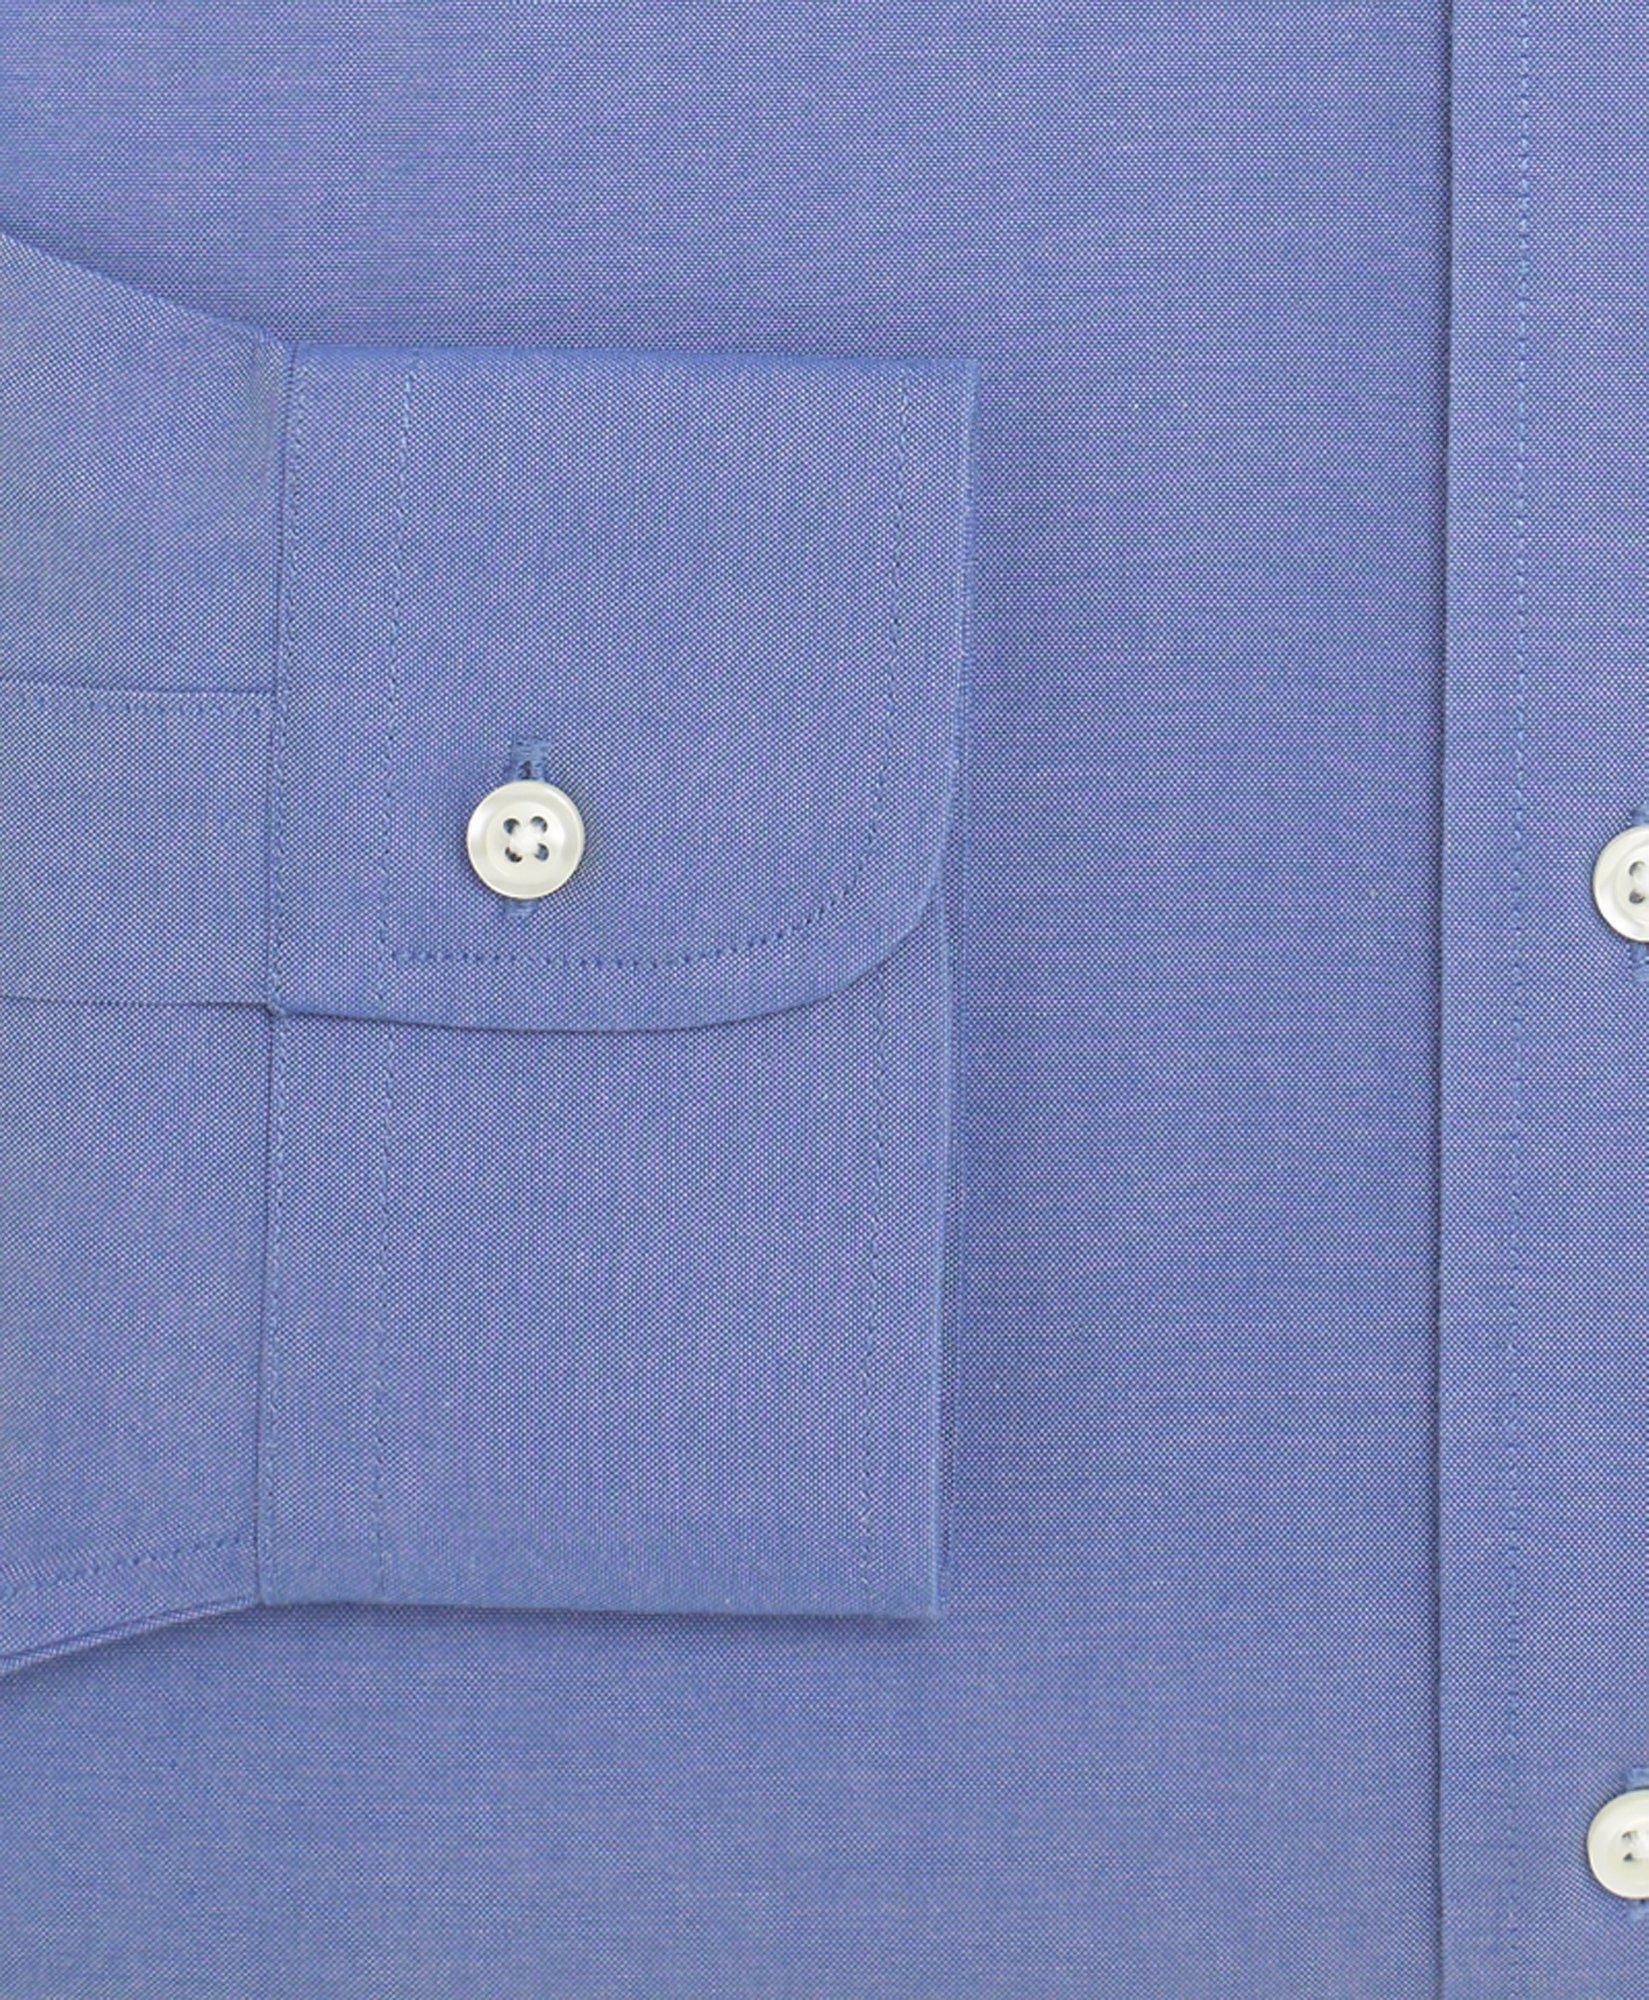 Brooks Brothers Men's Regent Regular-Fit Dress Shirt, Non-Iron Spread Collar | French Blue